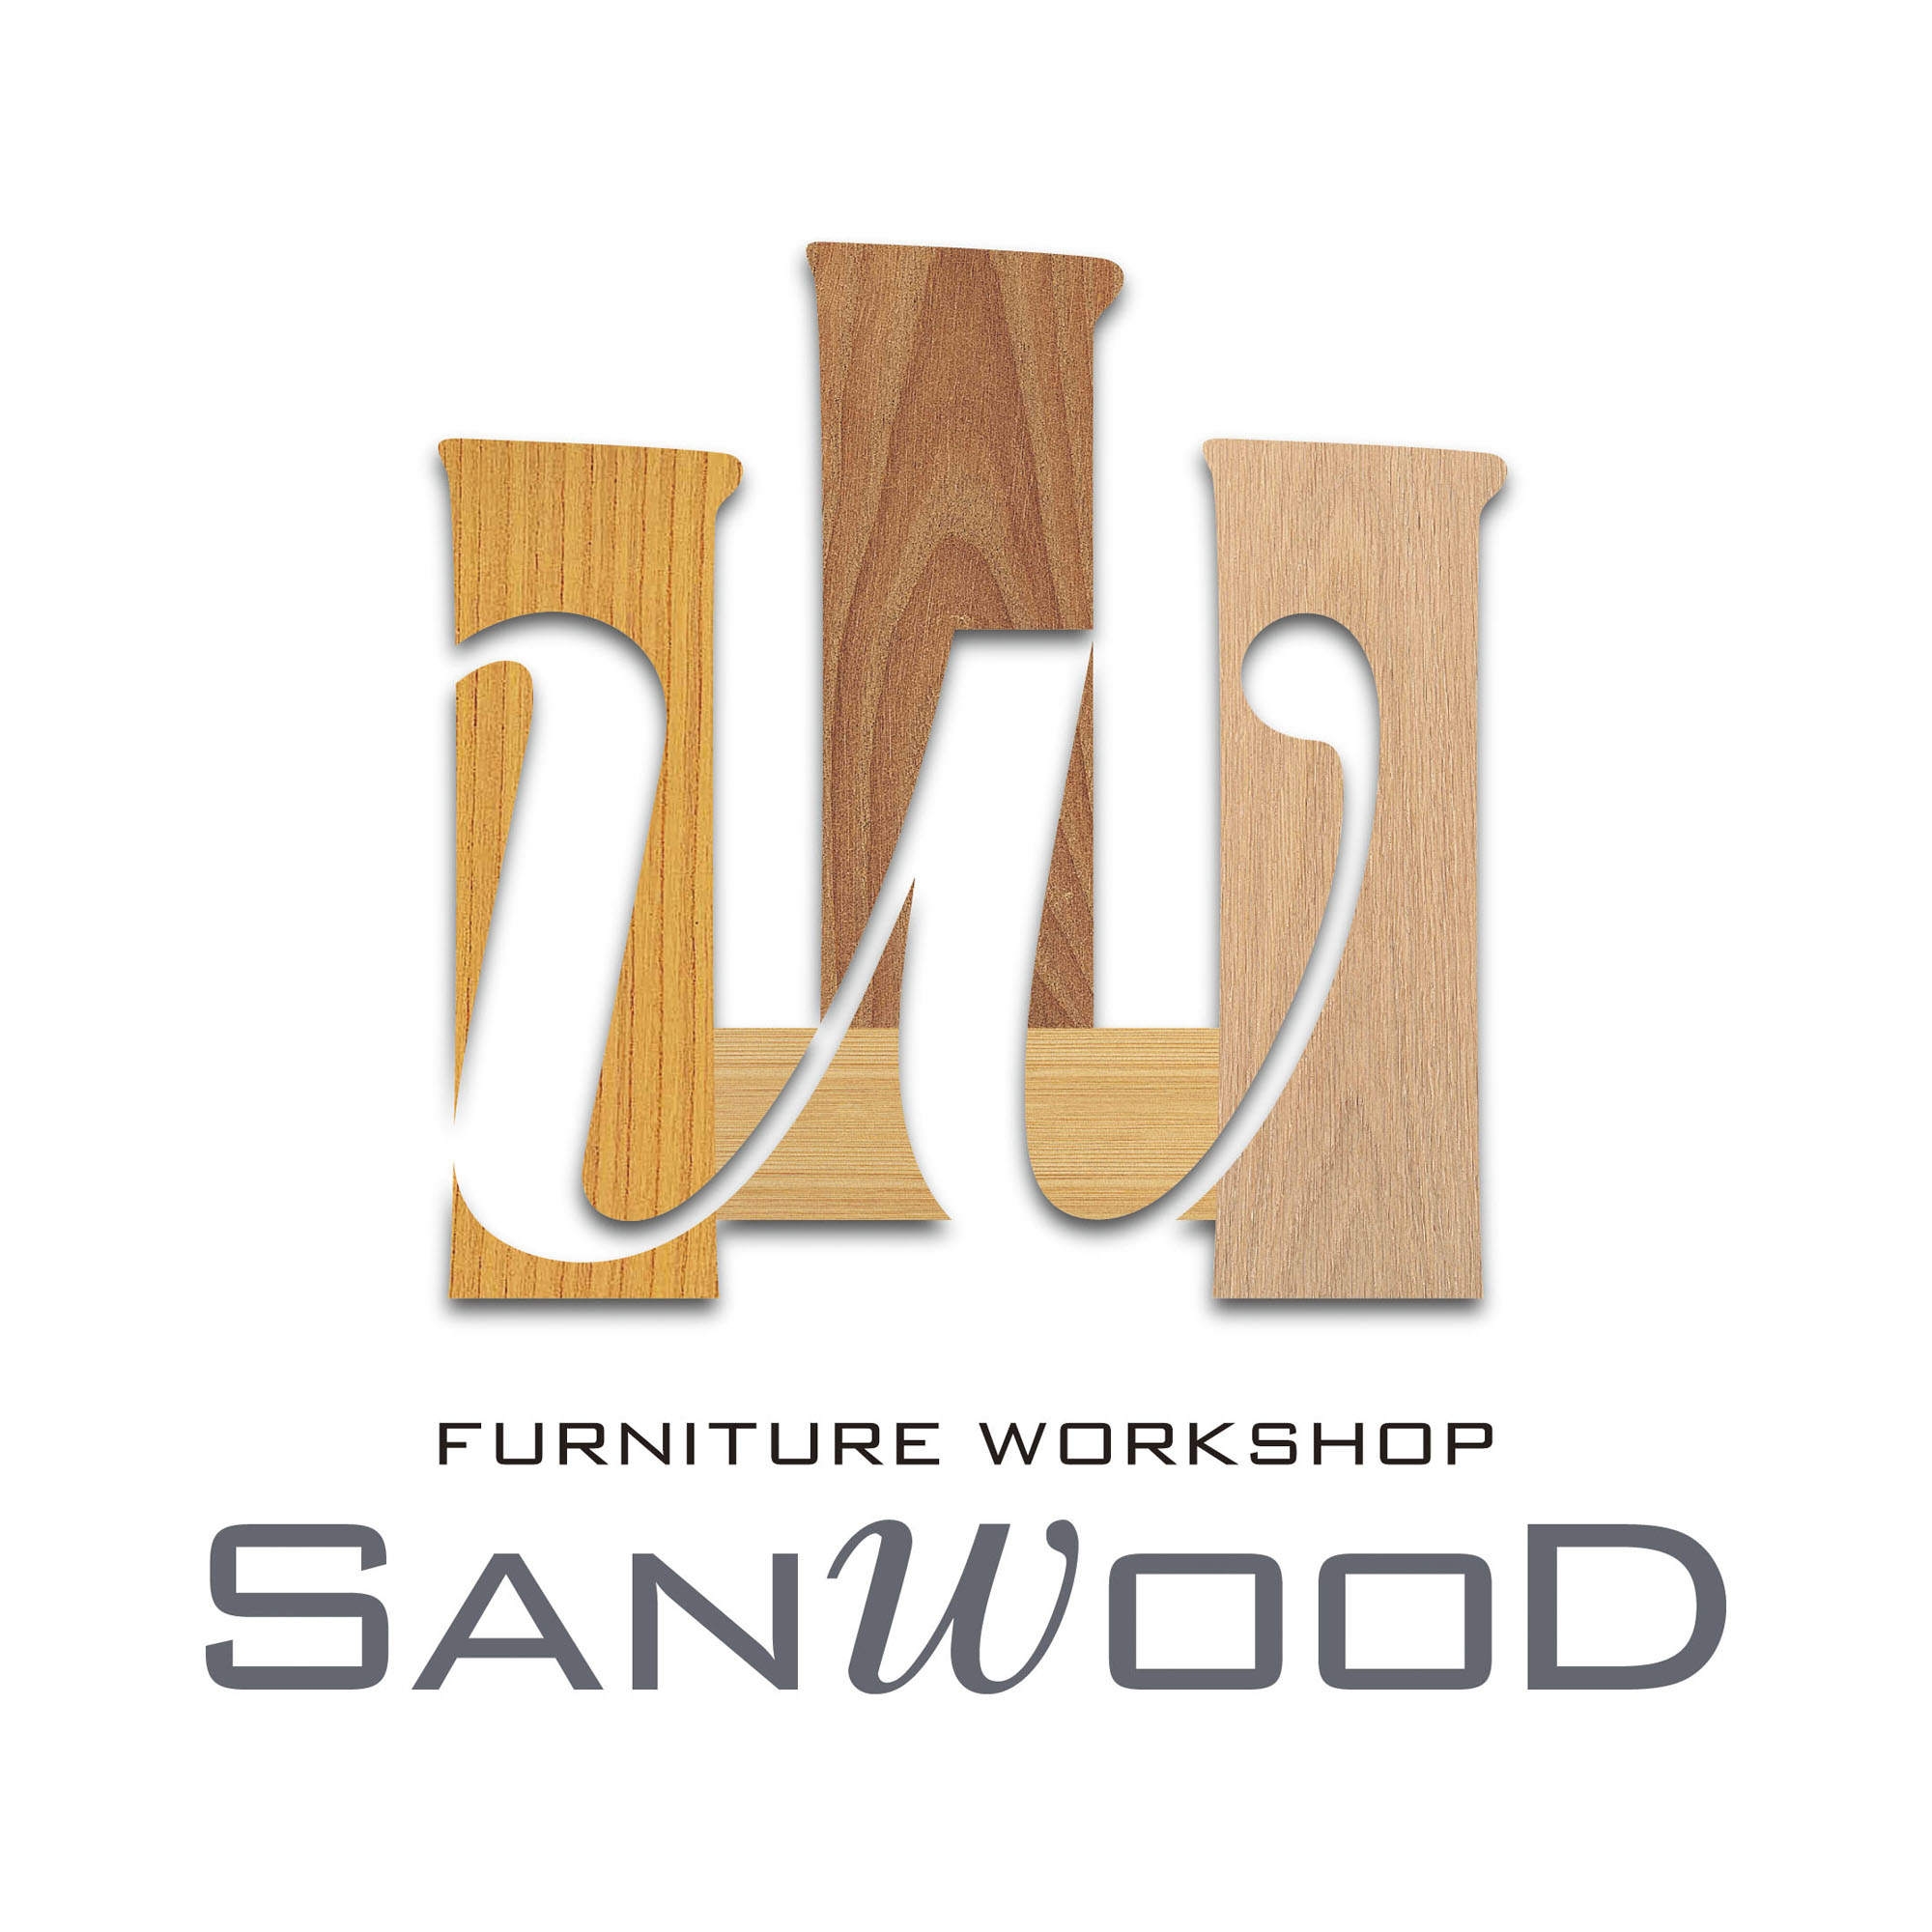 Furniture Workshop Sanwood